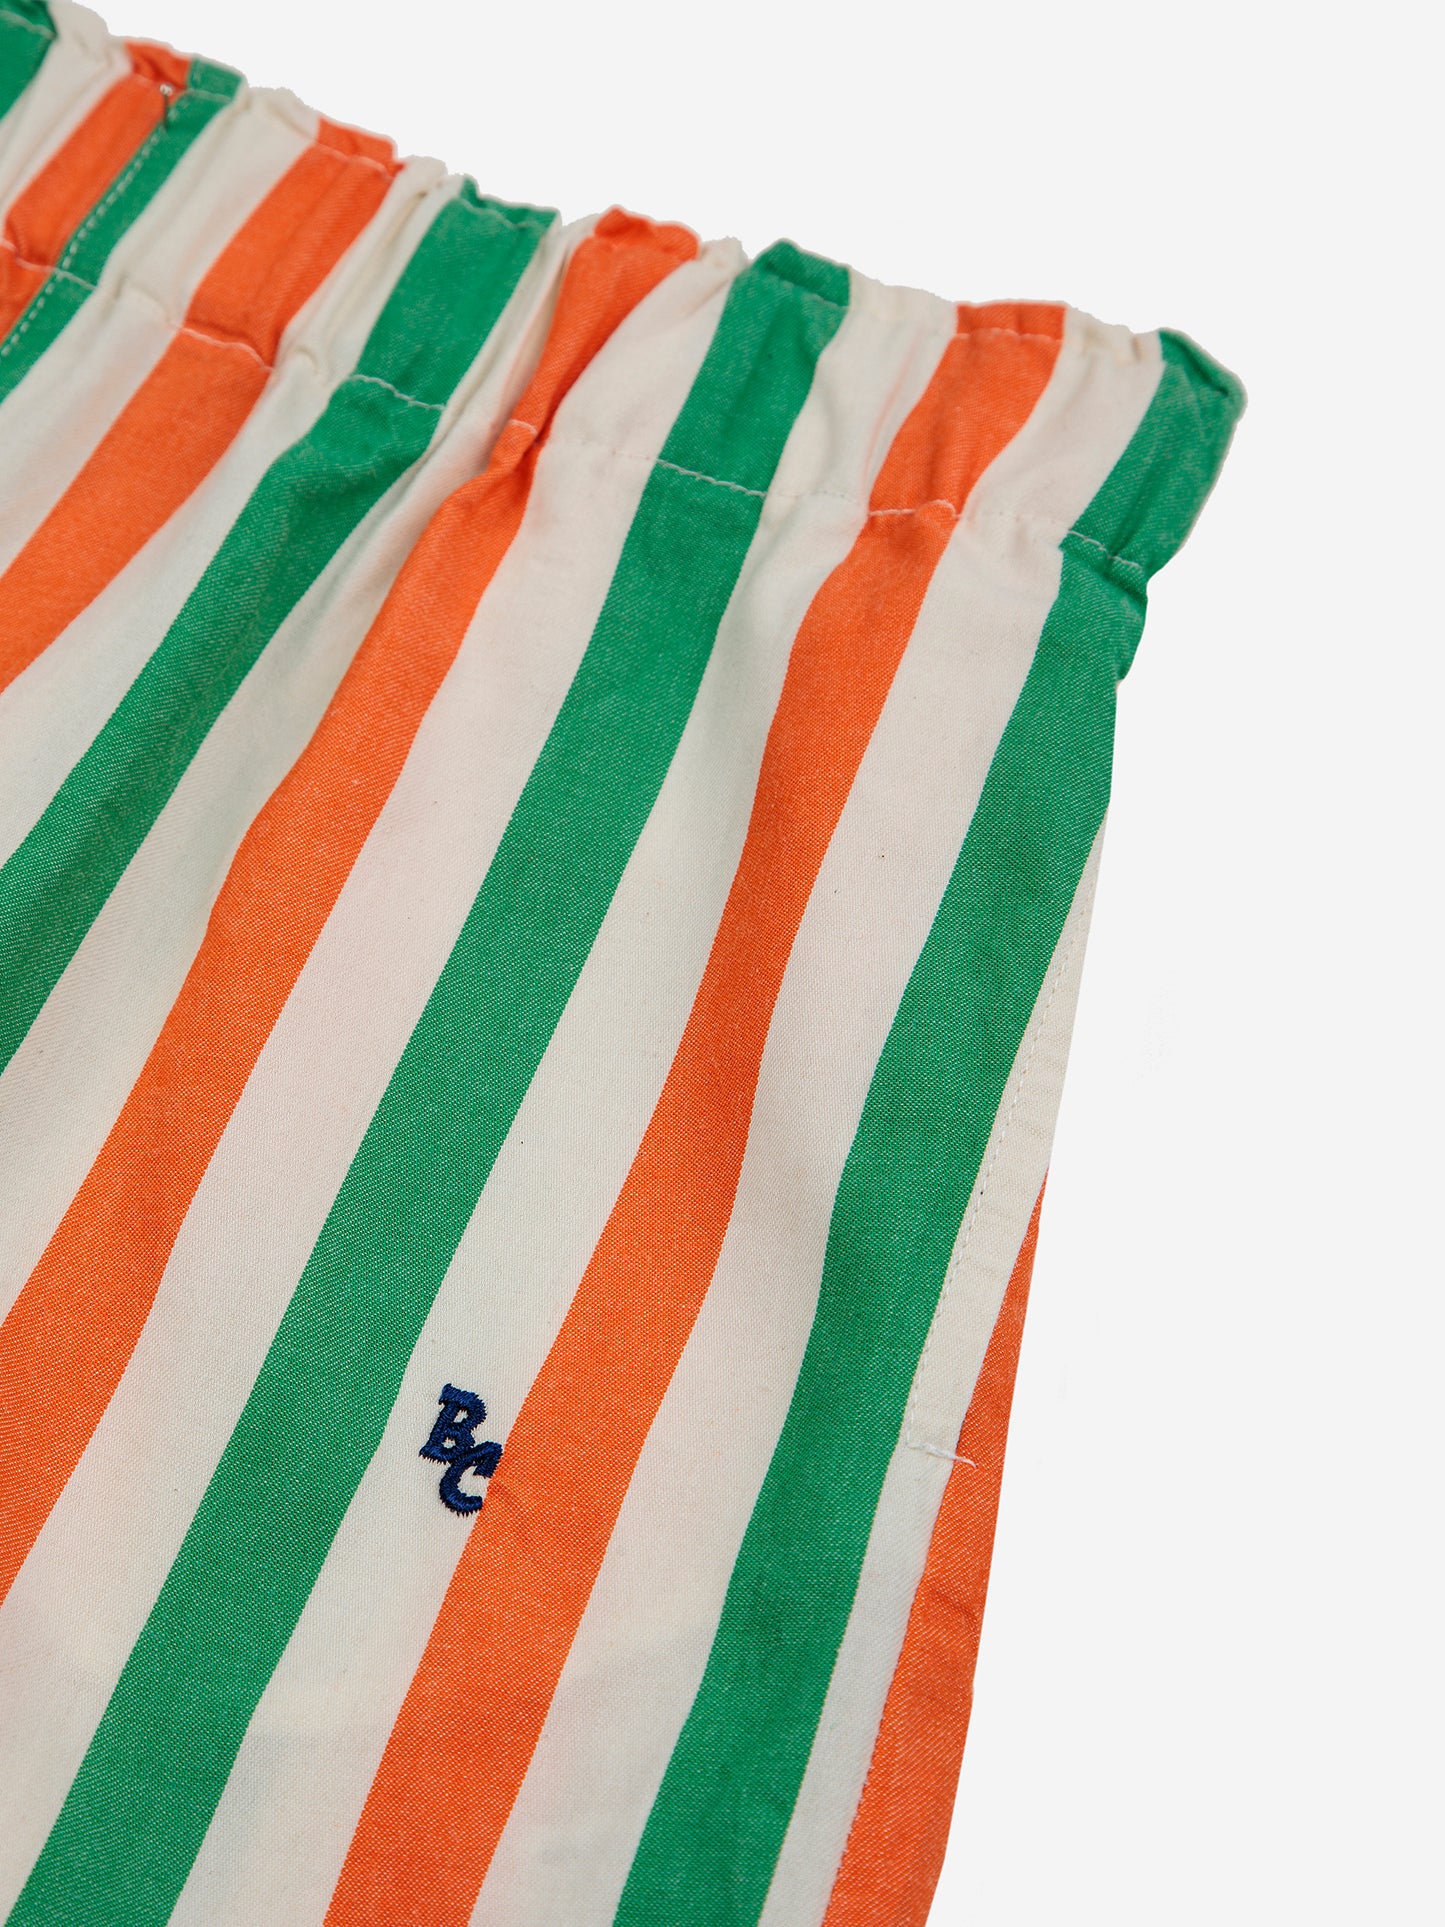 Bobo Choses Vertical Stripes Woven Pants Multicolor